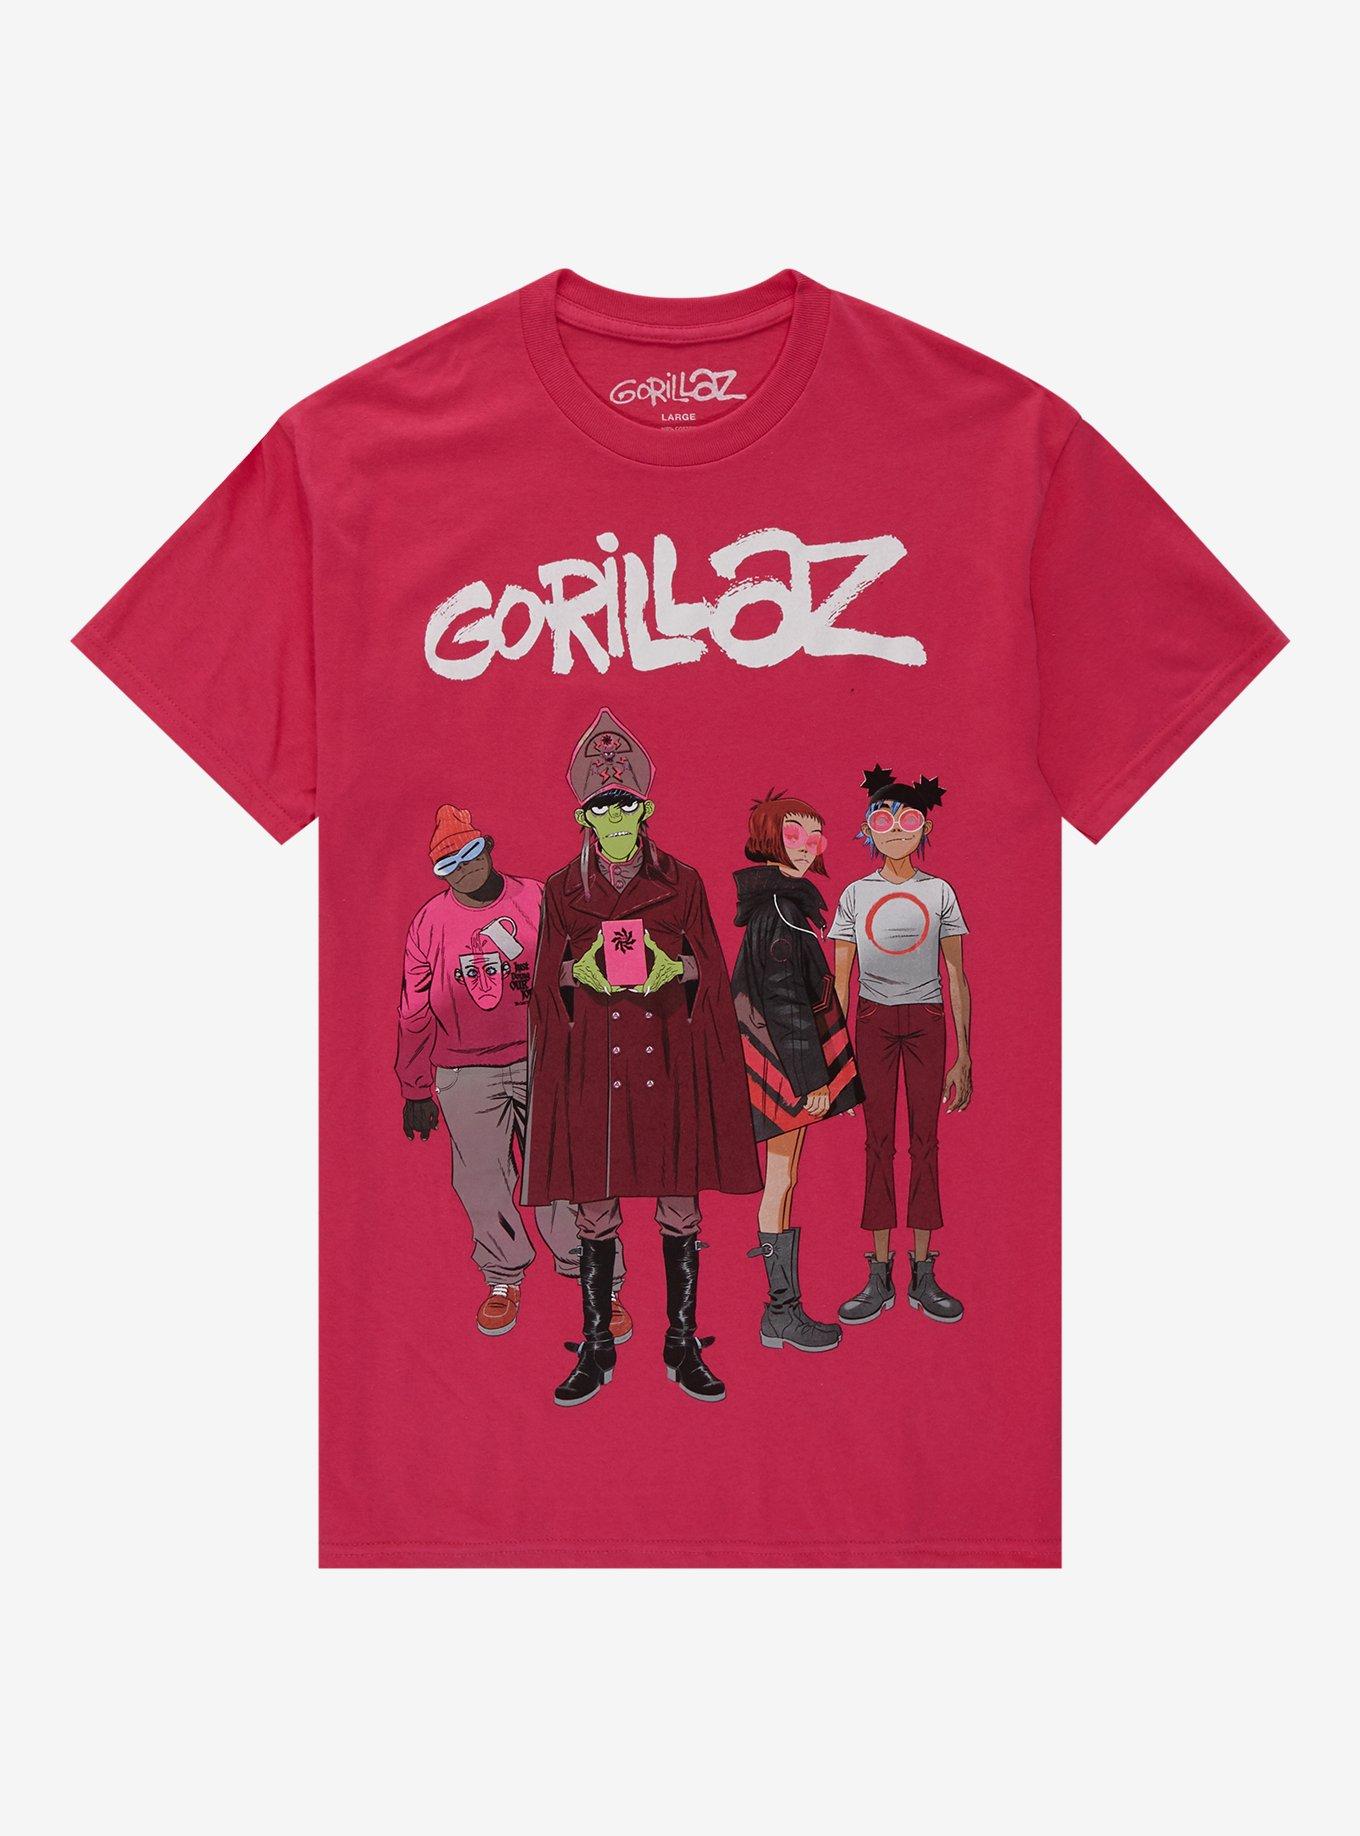 Gorillaz Cracker Island Boyfriend Fit Girls T-Shirt, HOT FUCHSIA, hi-res